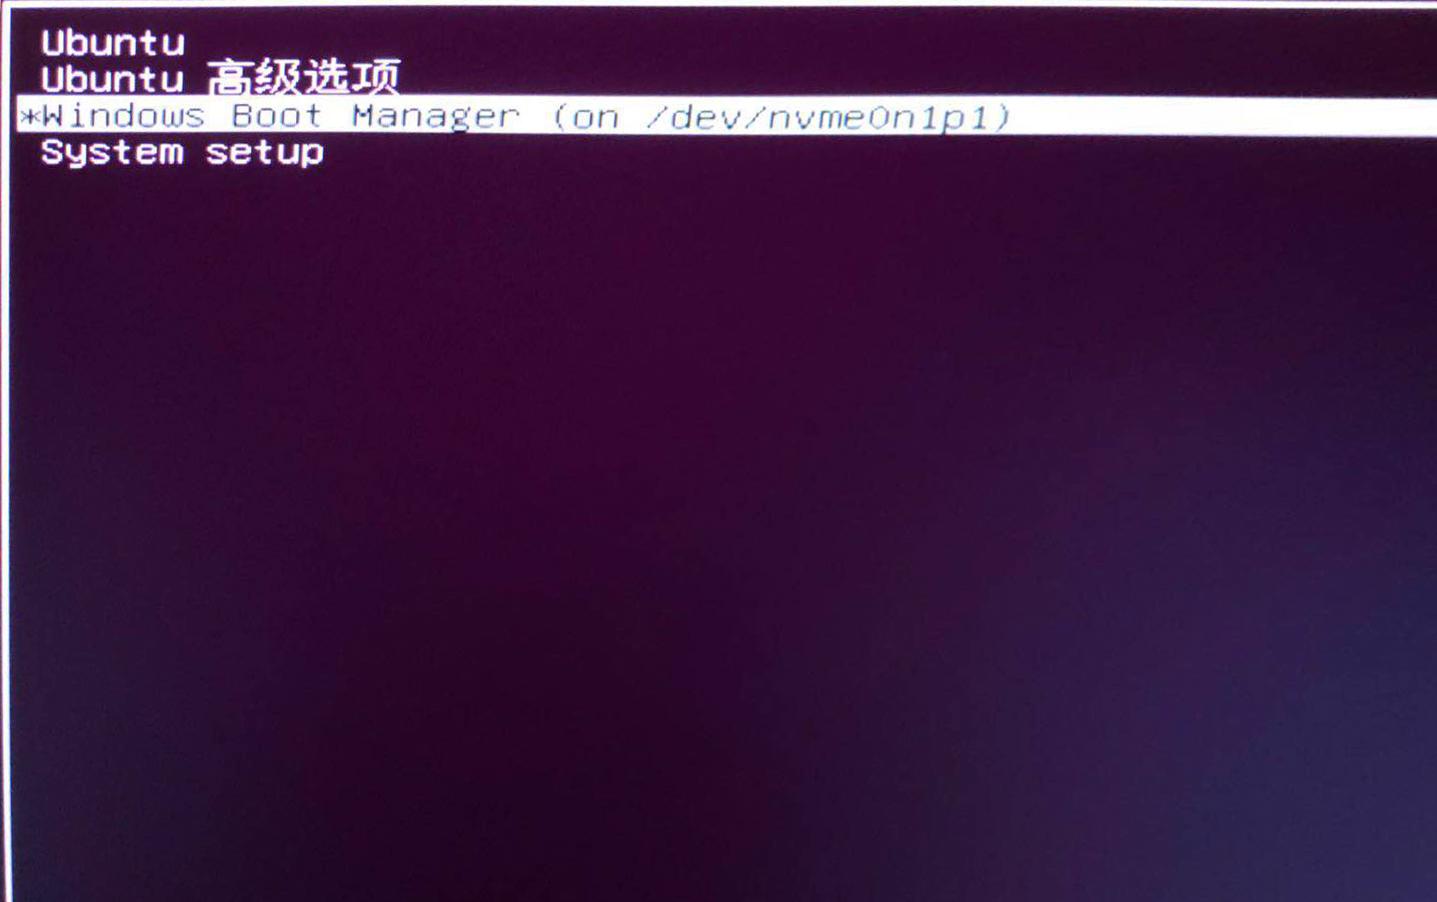 UEFI启动模式下的Win10+Ubuntu双系统安装指